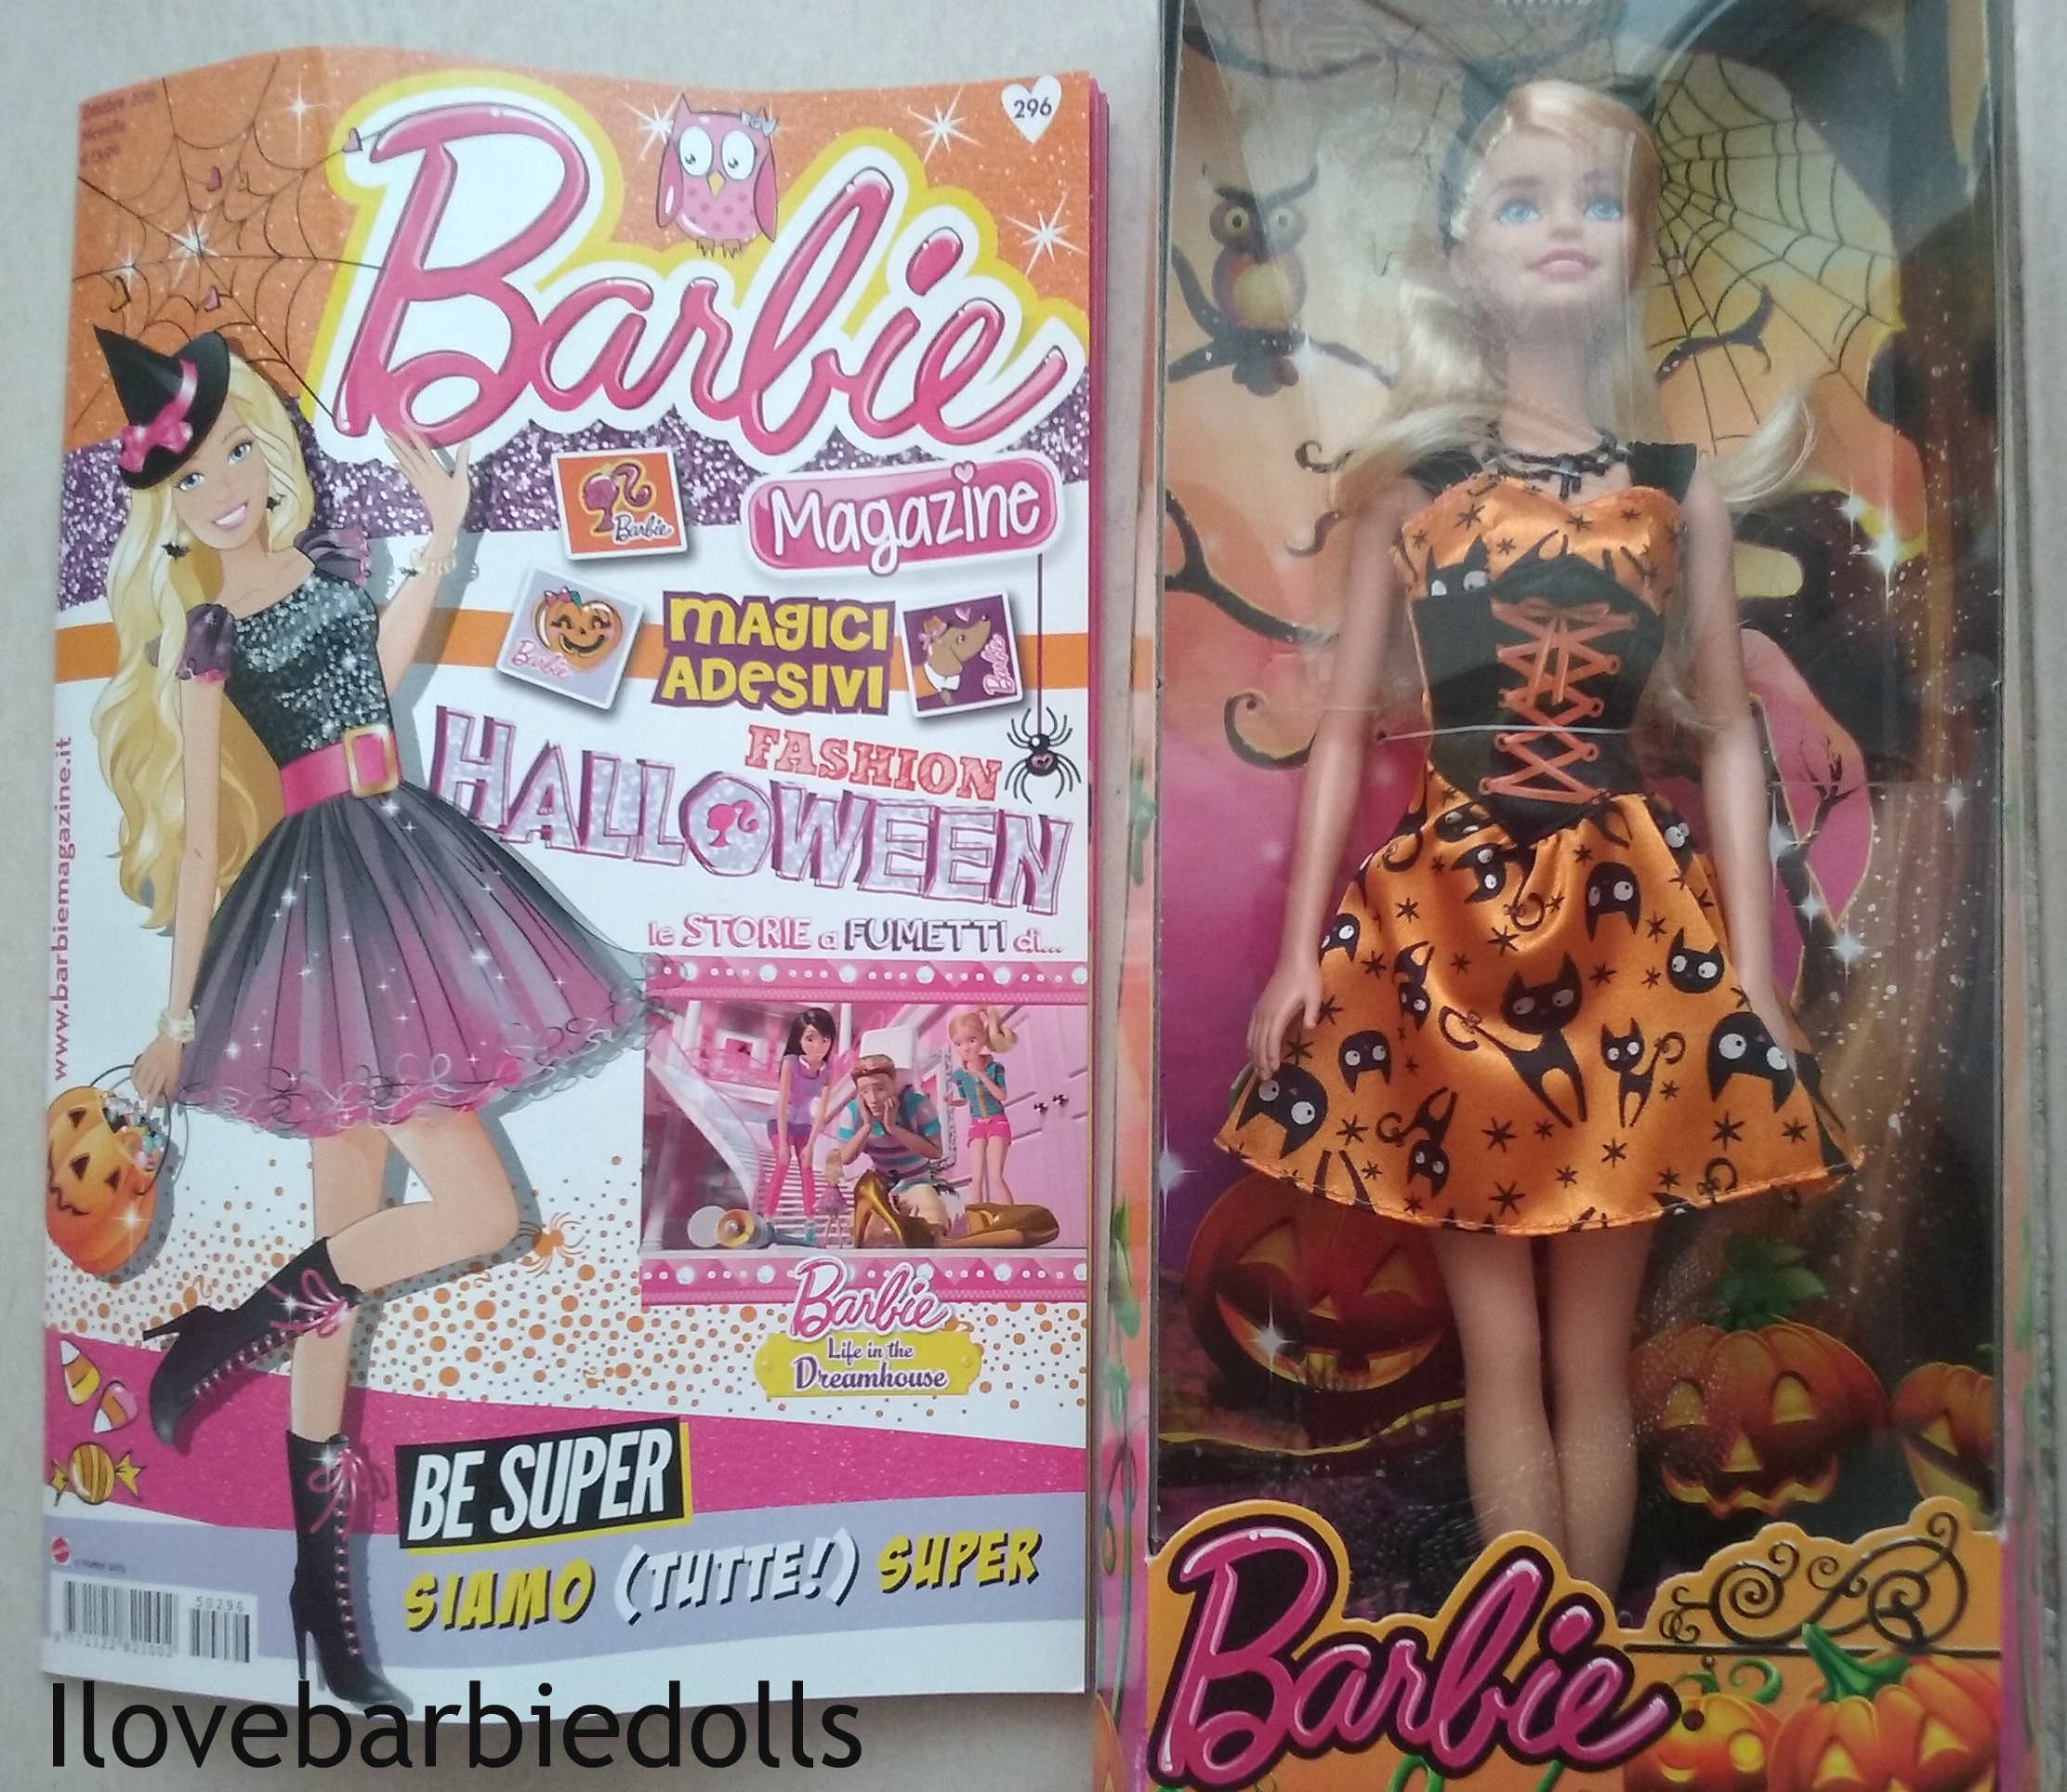 barbie halloween edicola